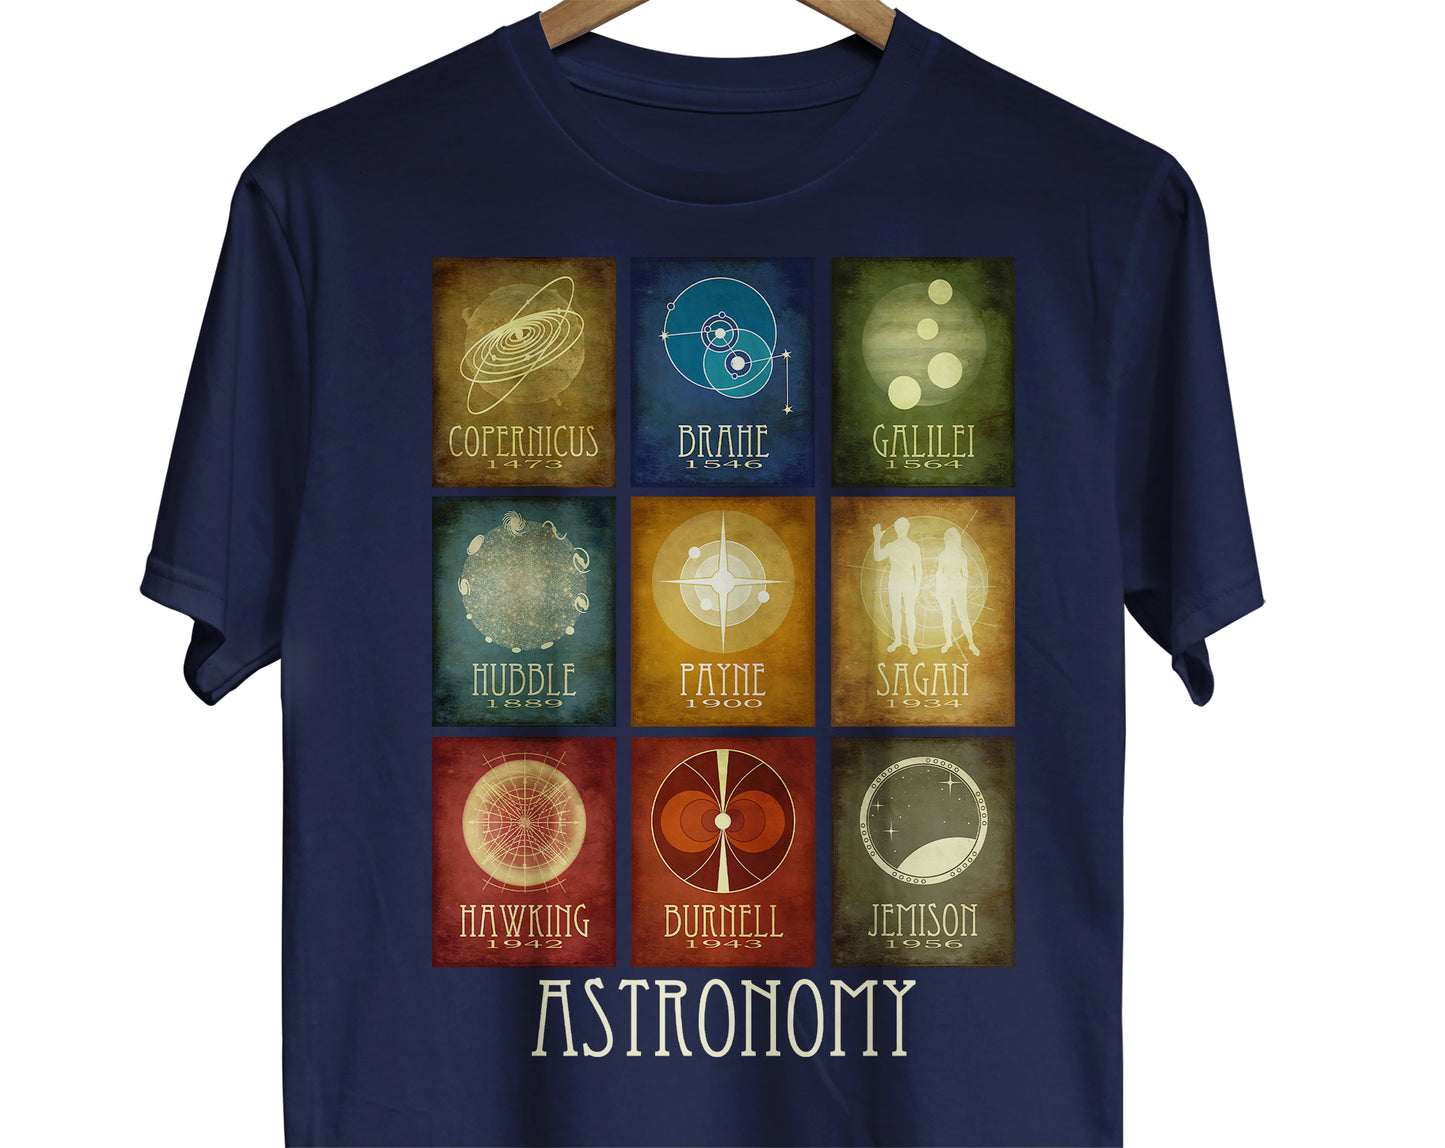 Astronomy t-shirt with graphics paying tribute to Nicolaus Copernicus, Tycho Brahe, Galileo, Edwin Hubble, Cecelia Payne, Carl Sagan, Stephen Hawking, Jocelyn Bell Burnless, and Mae Jemison